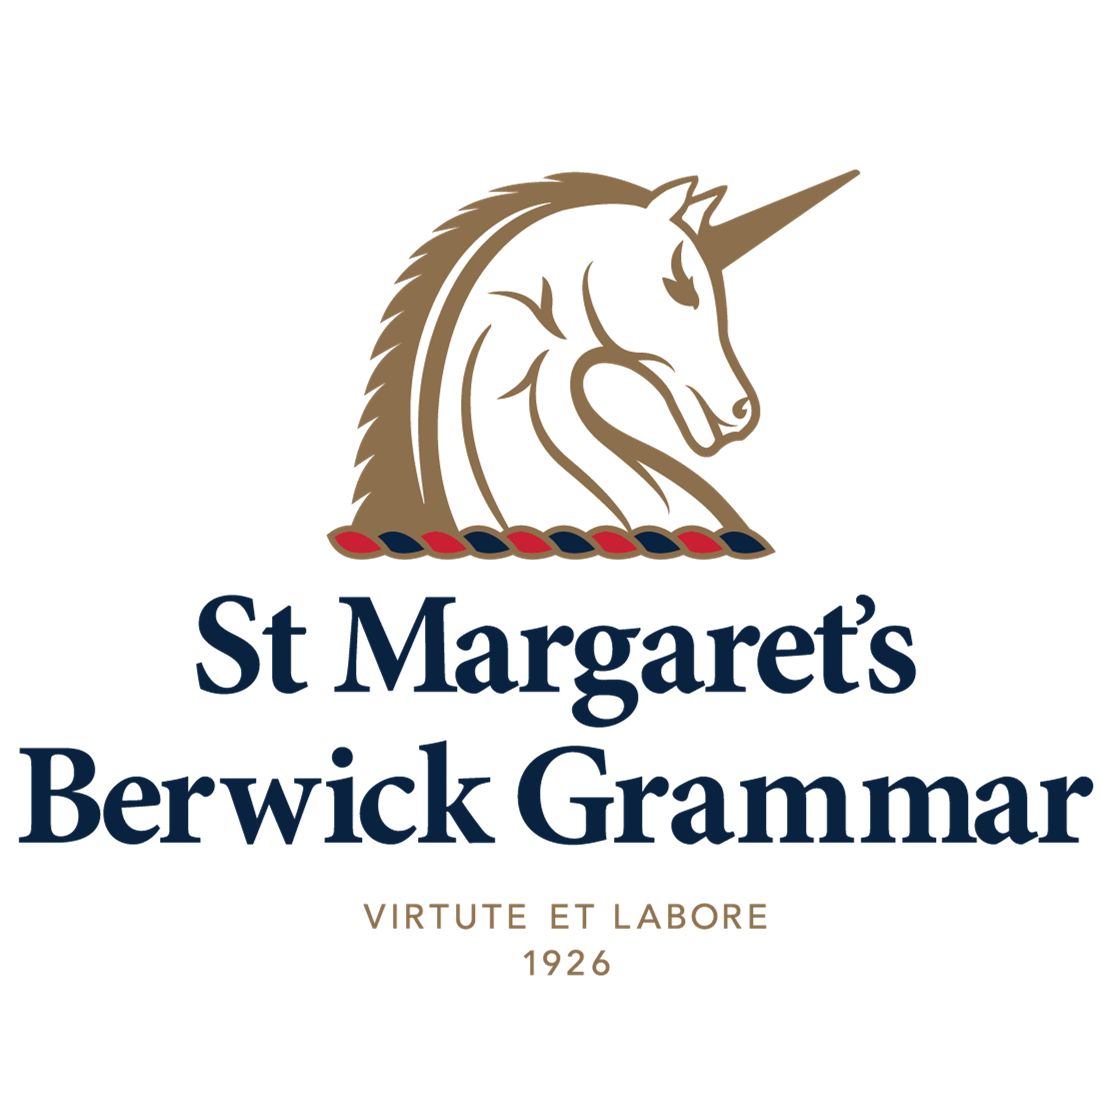 St Margaret's Berwick Grammar